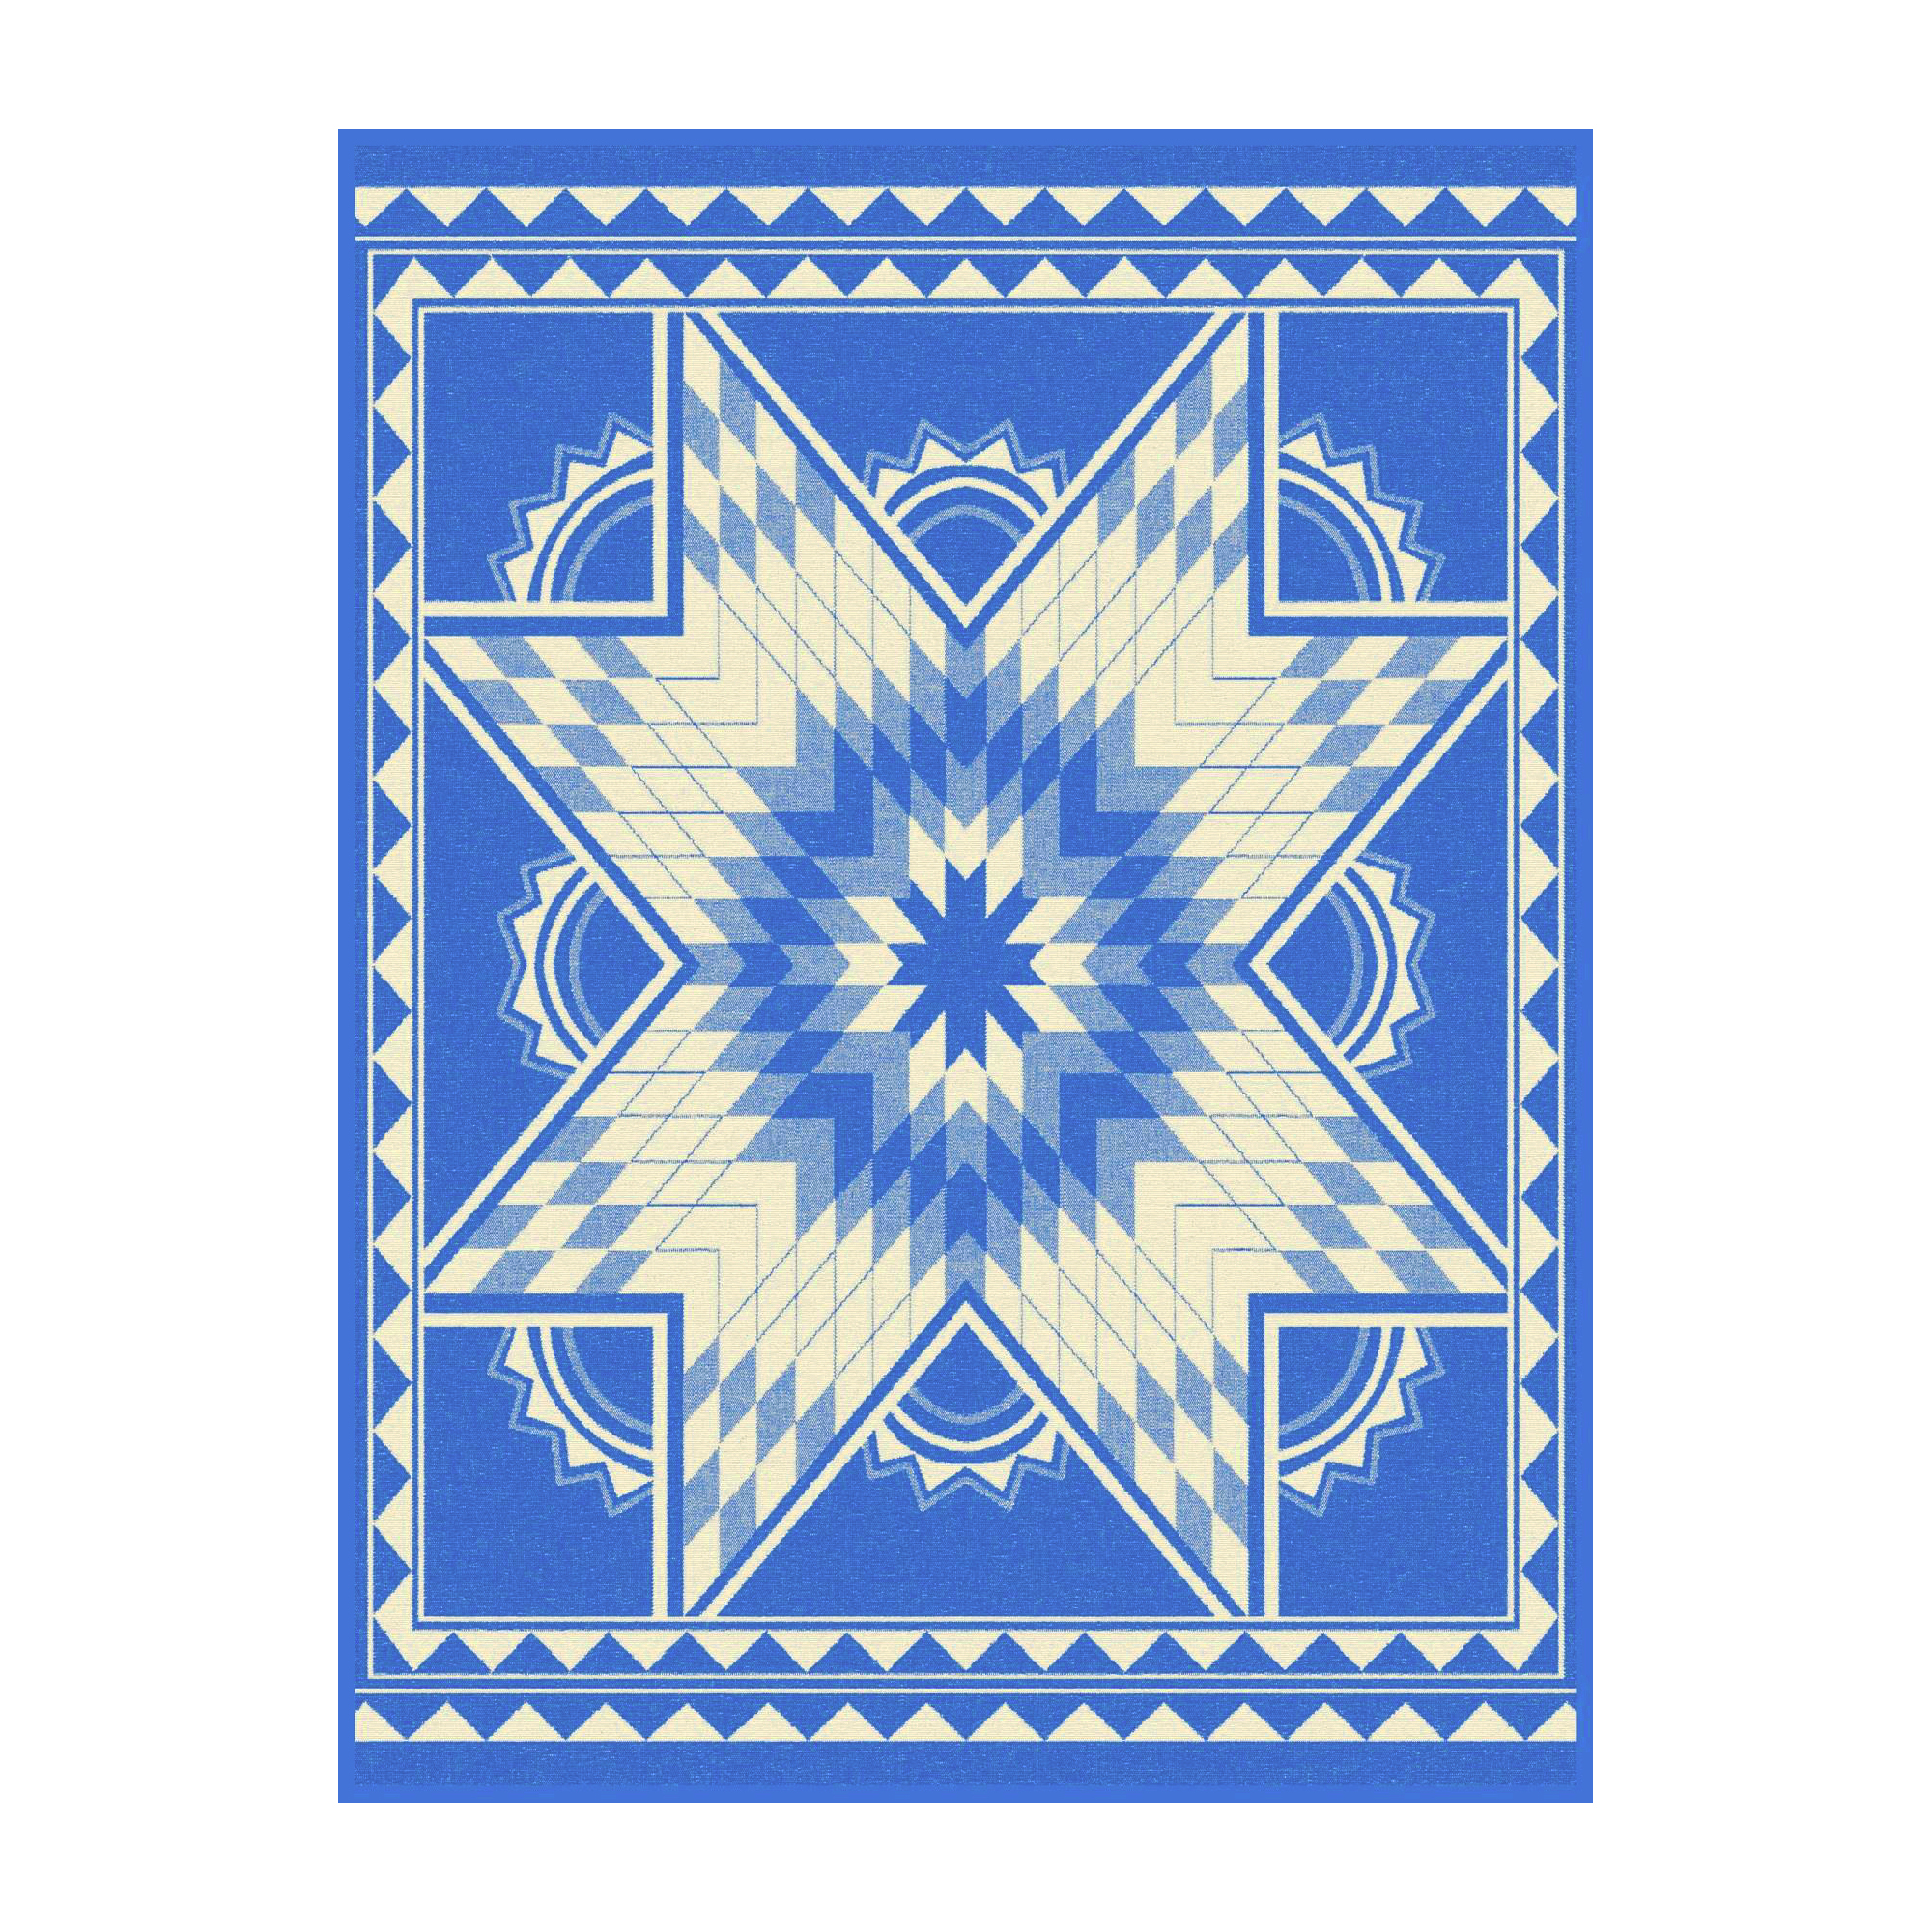 IBENA Vibrant Blue Jacquard Woven Cotton Blend Throw Blanket Quilting Star 